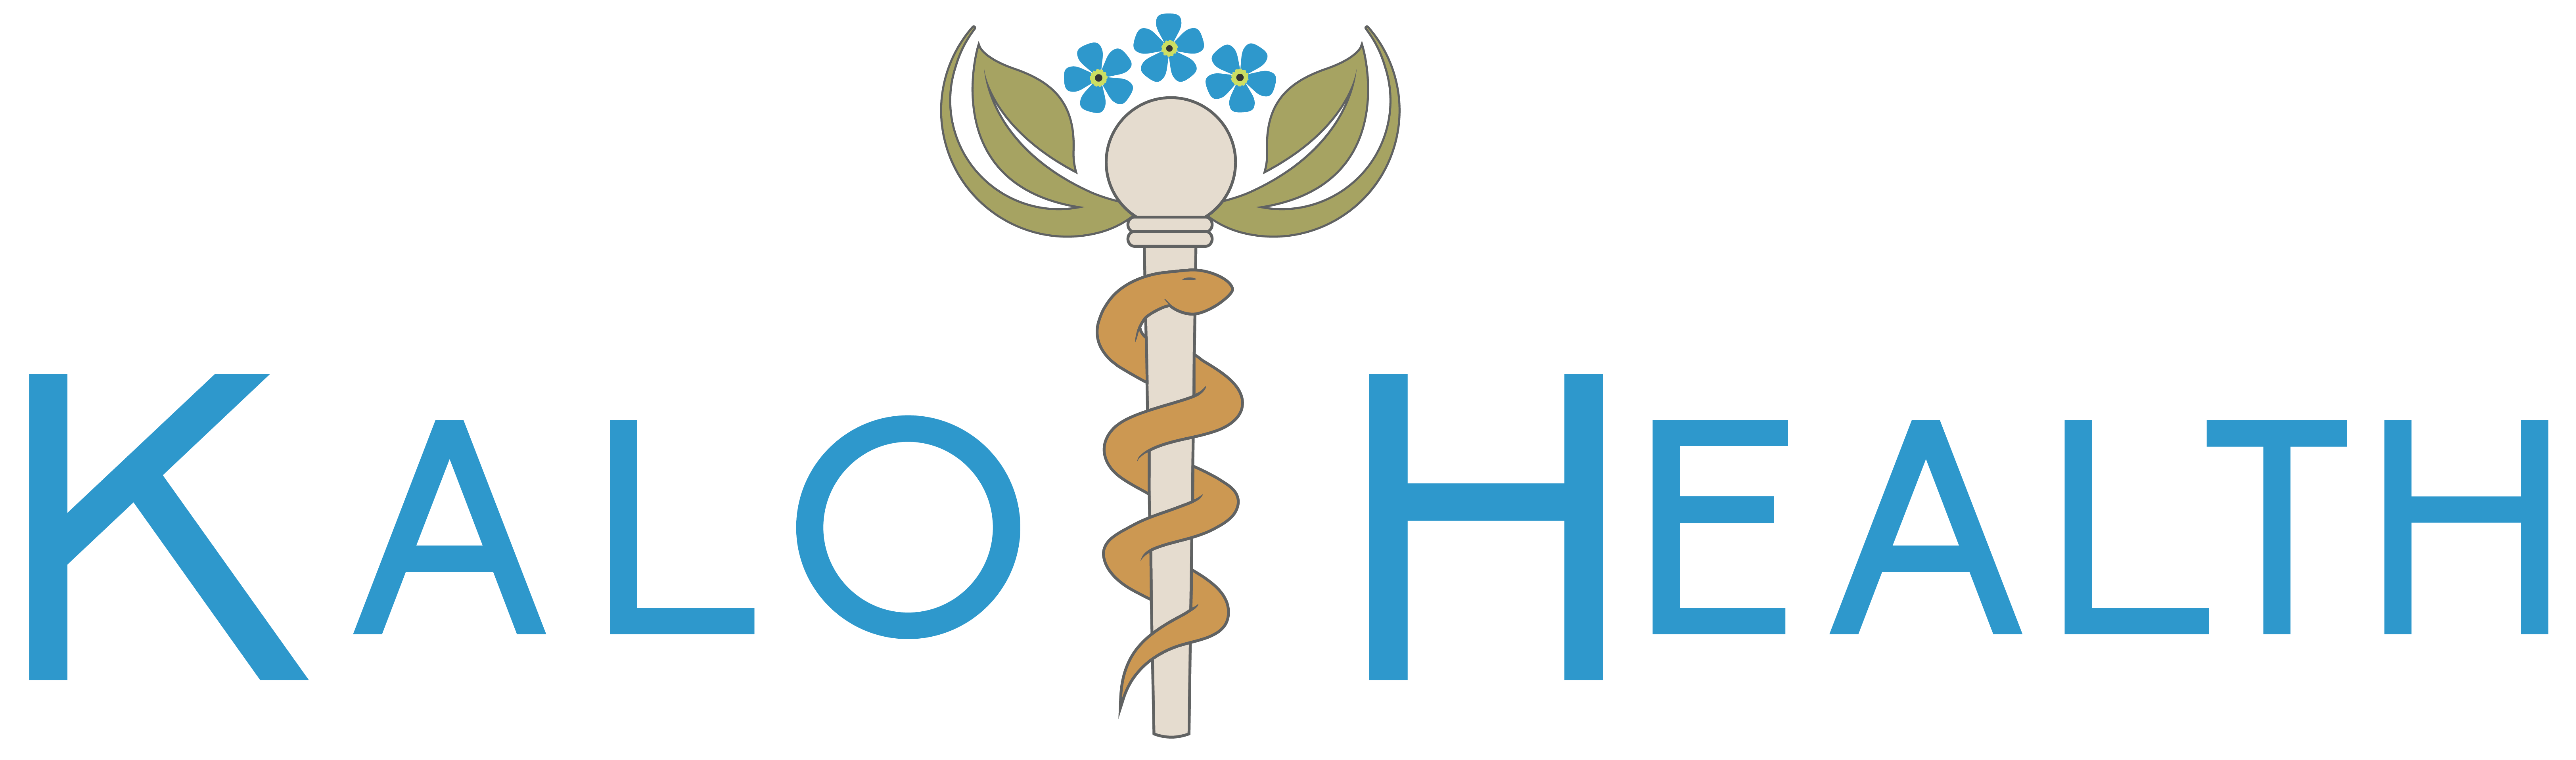 Kalo Health Logo - Primary Care Physician Denver